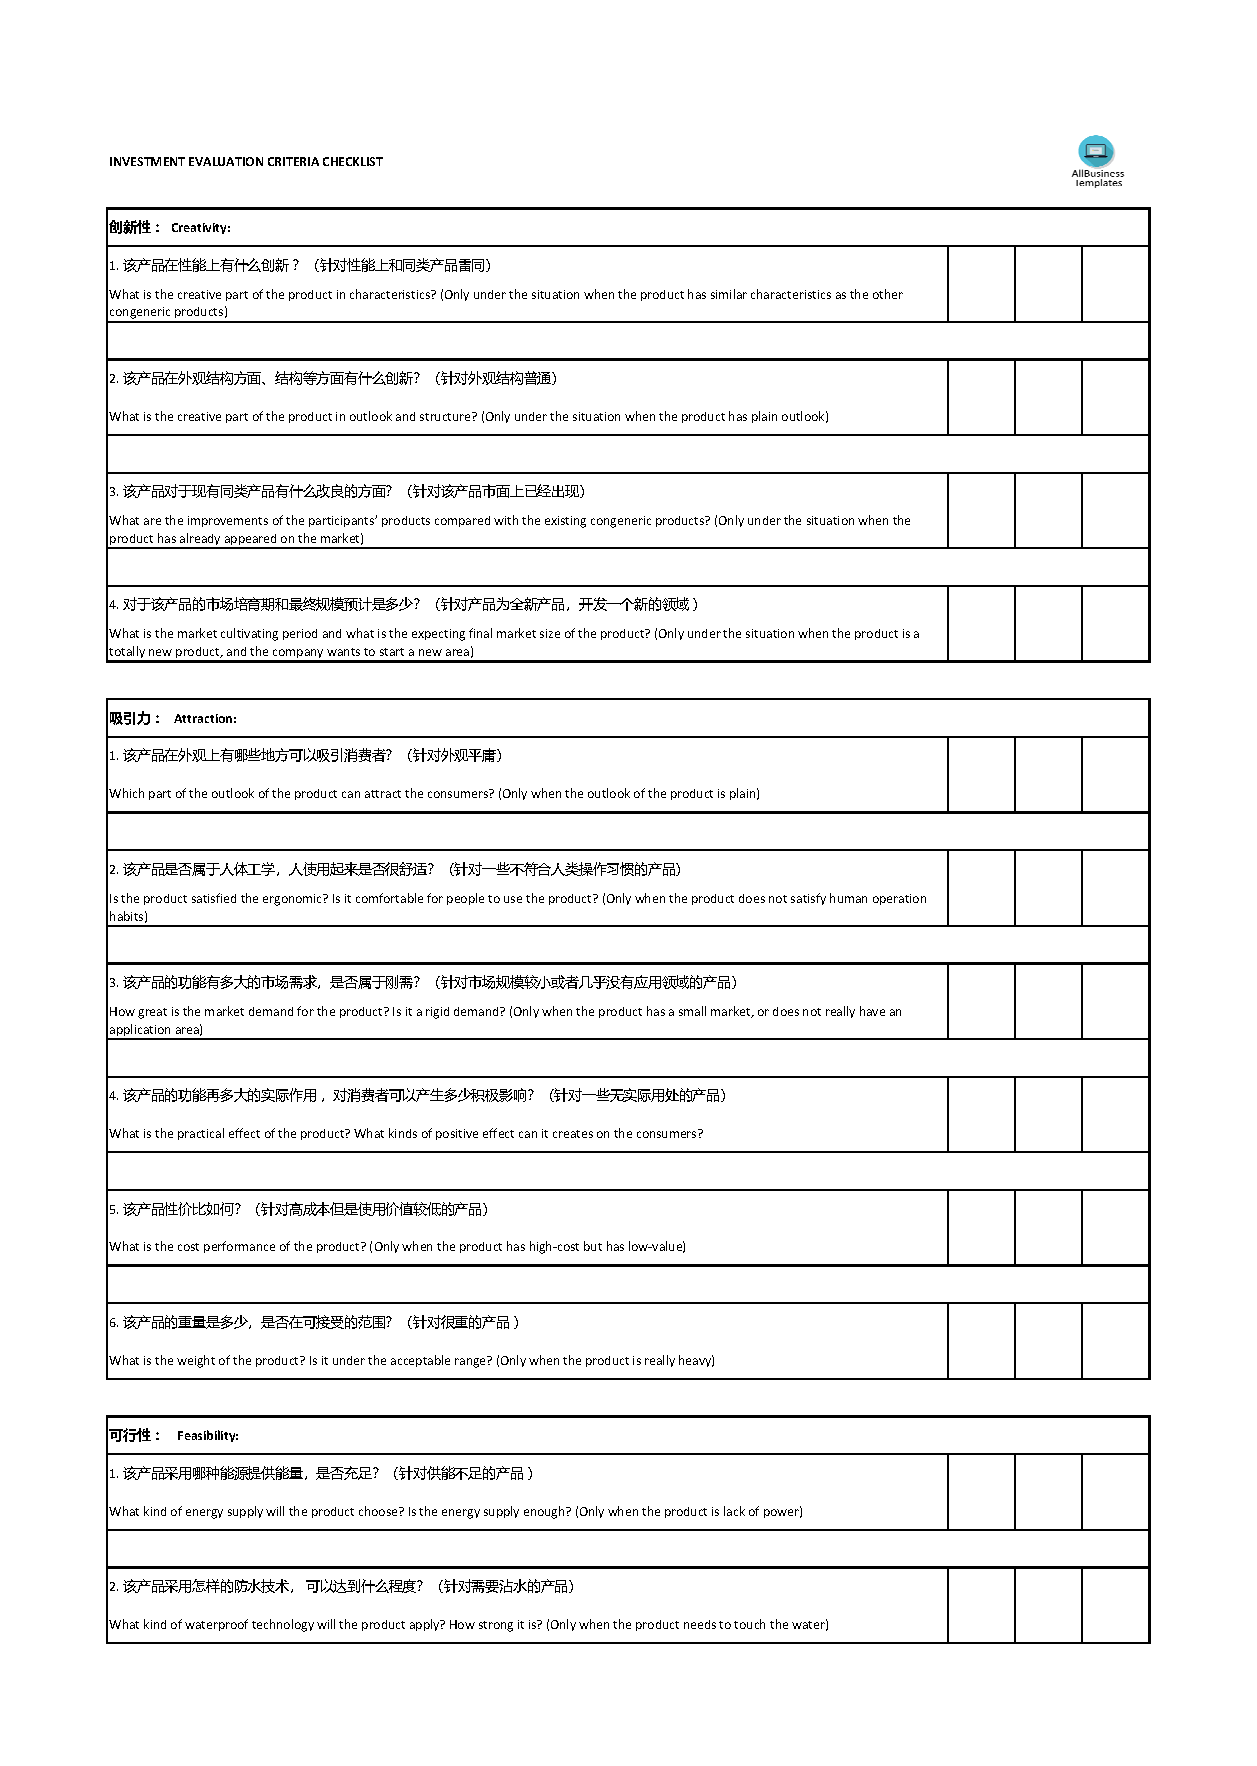 investment evaluation criteria checklist template